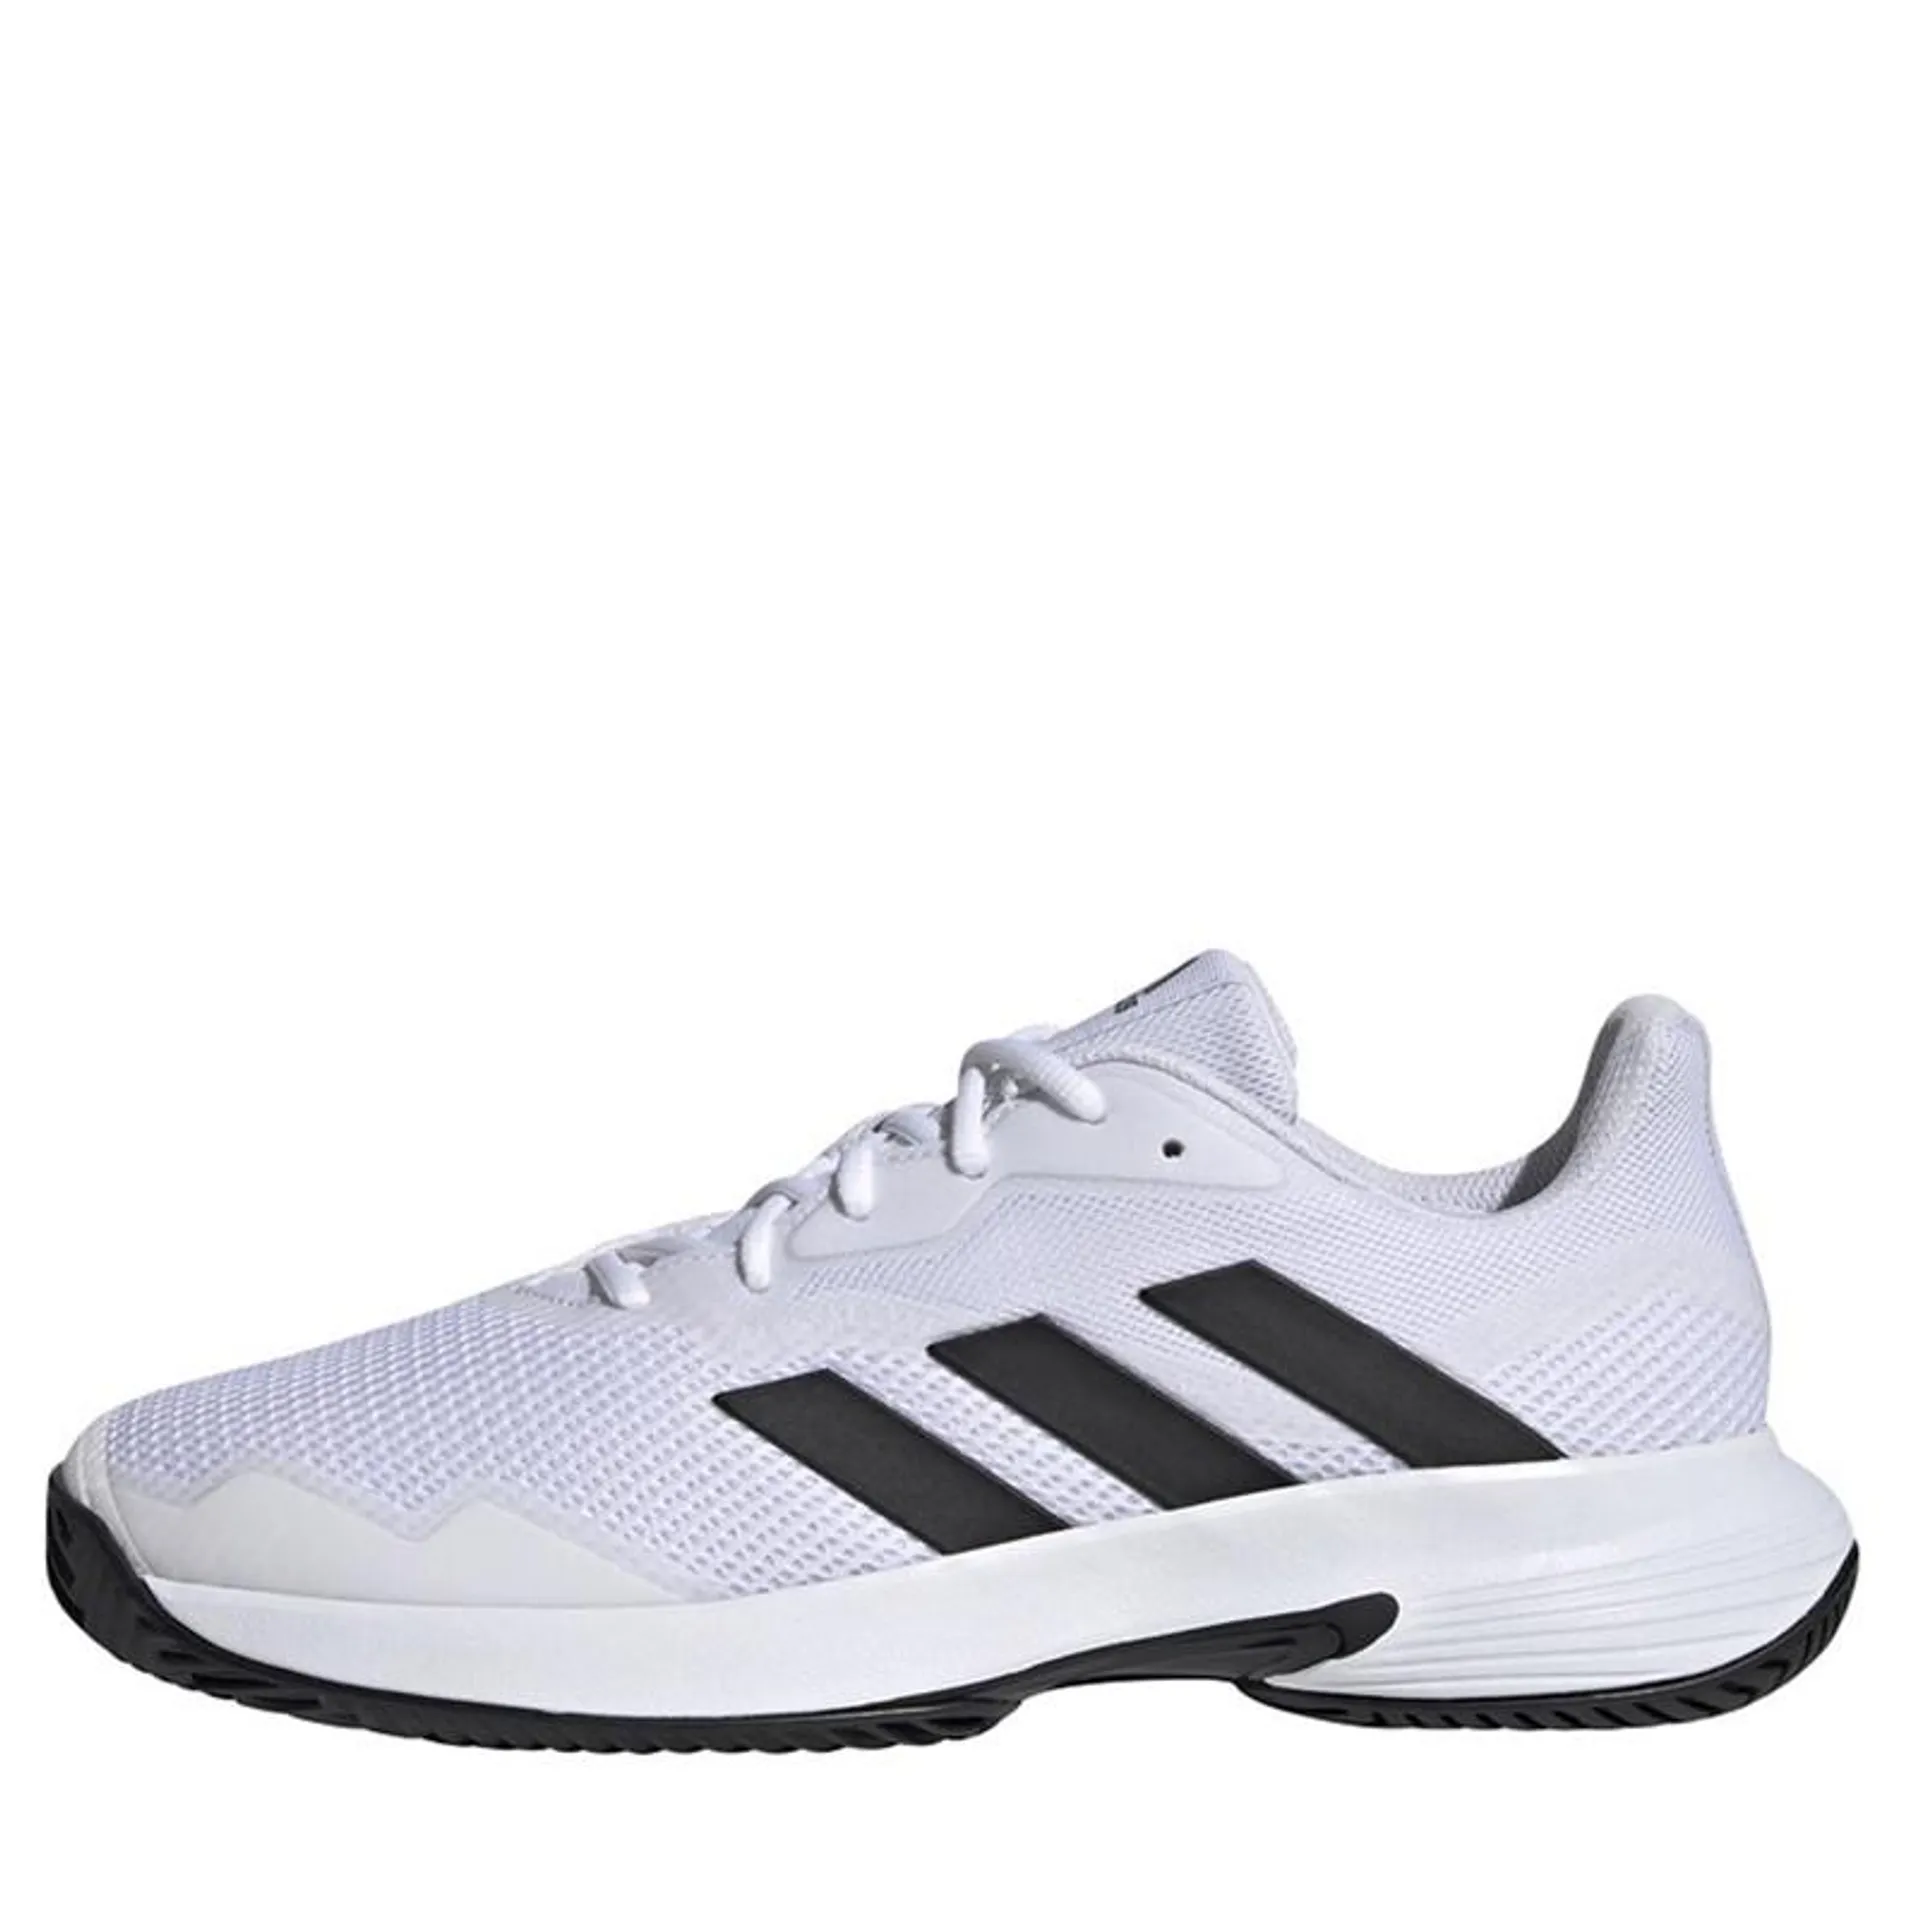 adidas Mens Courtjam Control Tennis Shoes Footwear White/Core Black/Footwear White